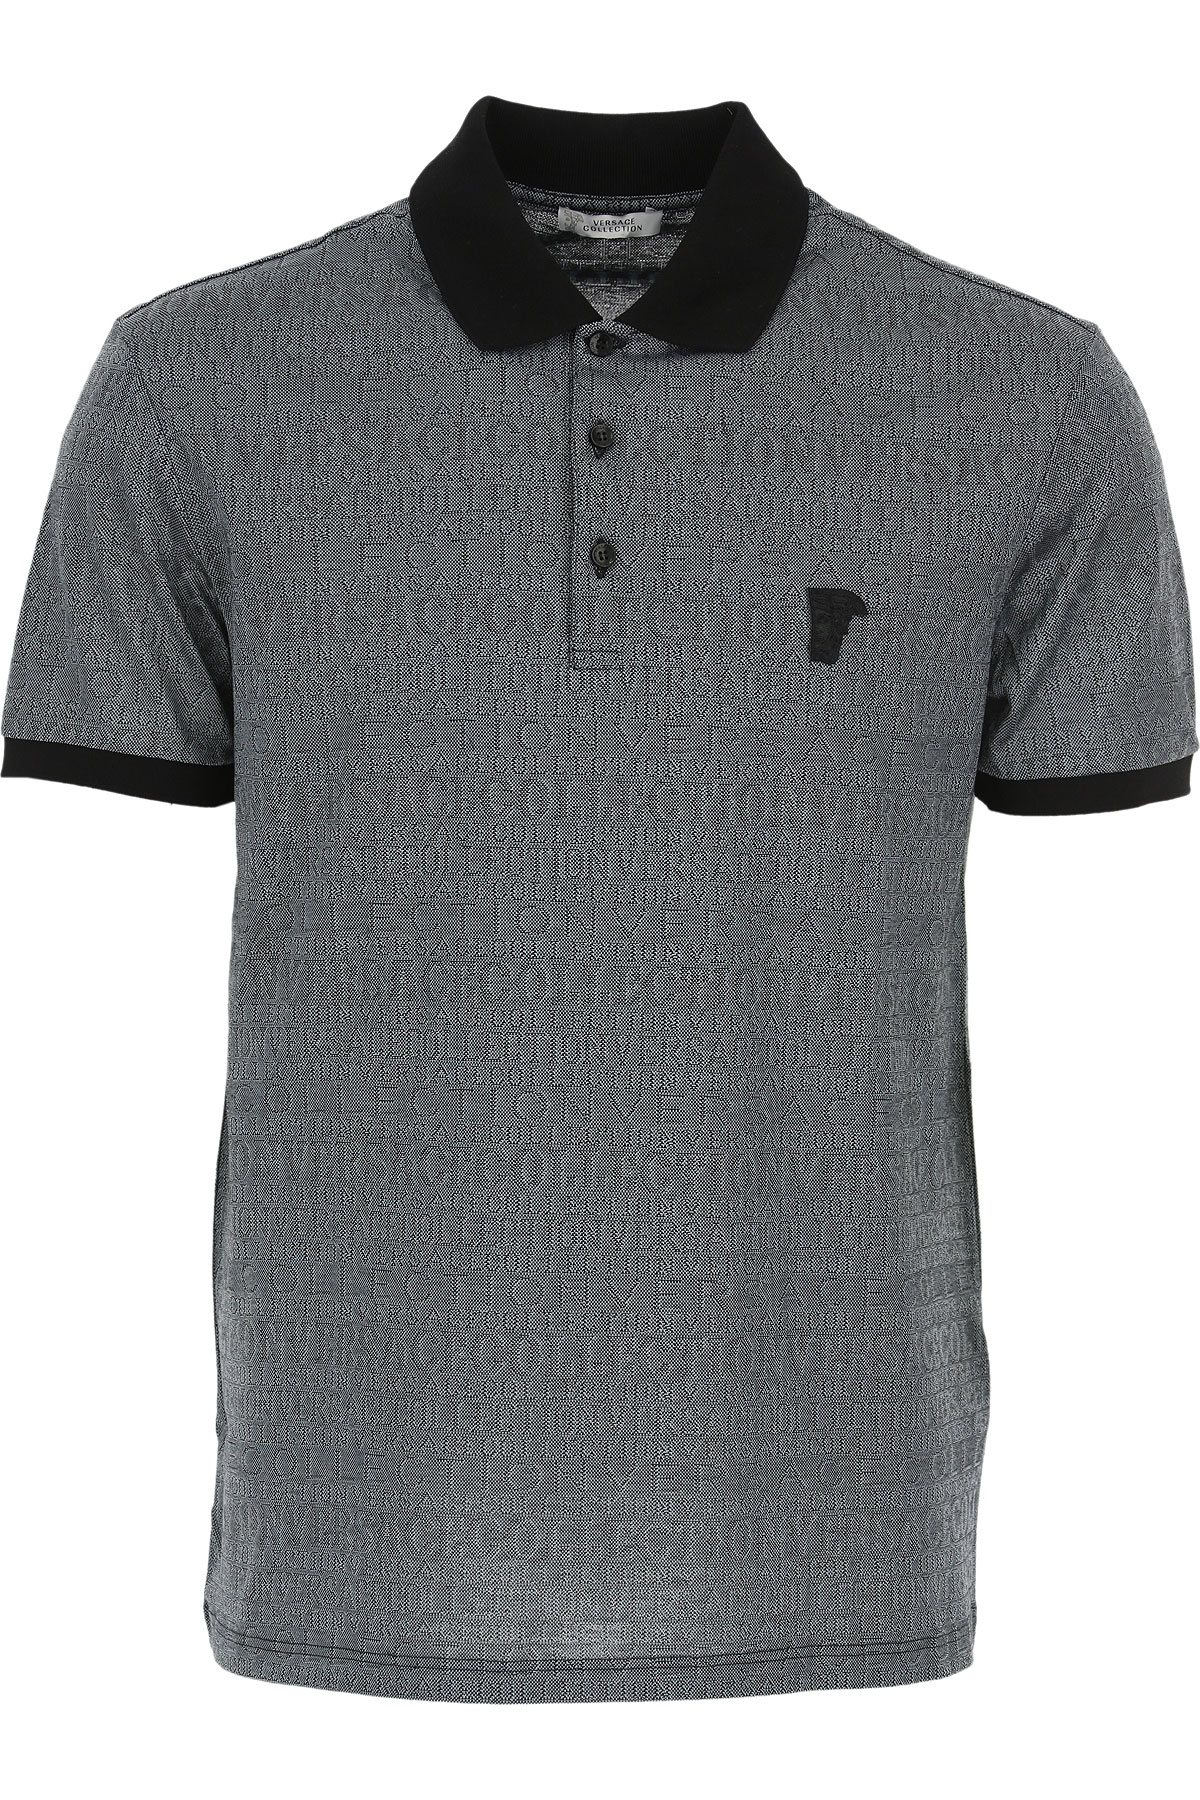 Versace Polohemd für Herren, Polo-Hemd, Polo-Shirt Günstig im Sale, Denim Blau, Baumwolle, 2017, L S XL